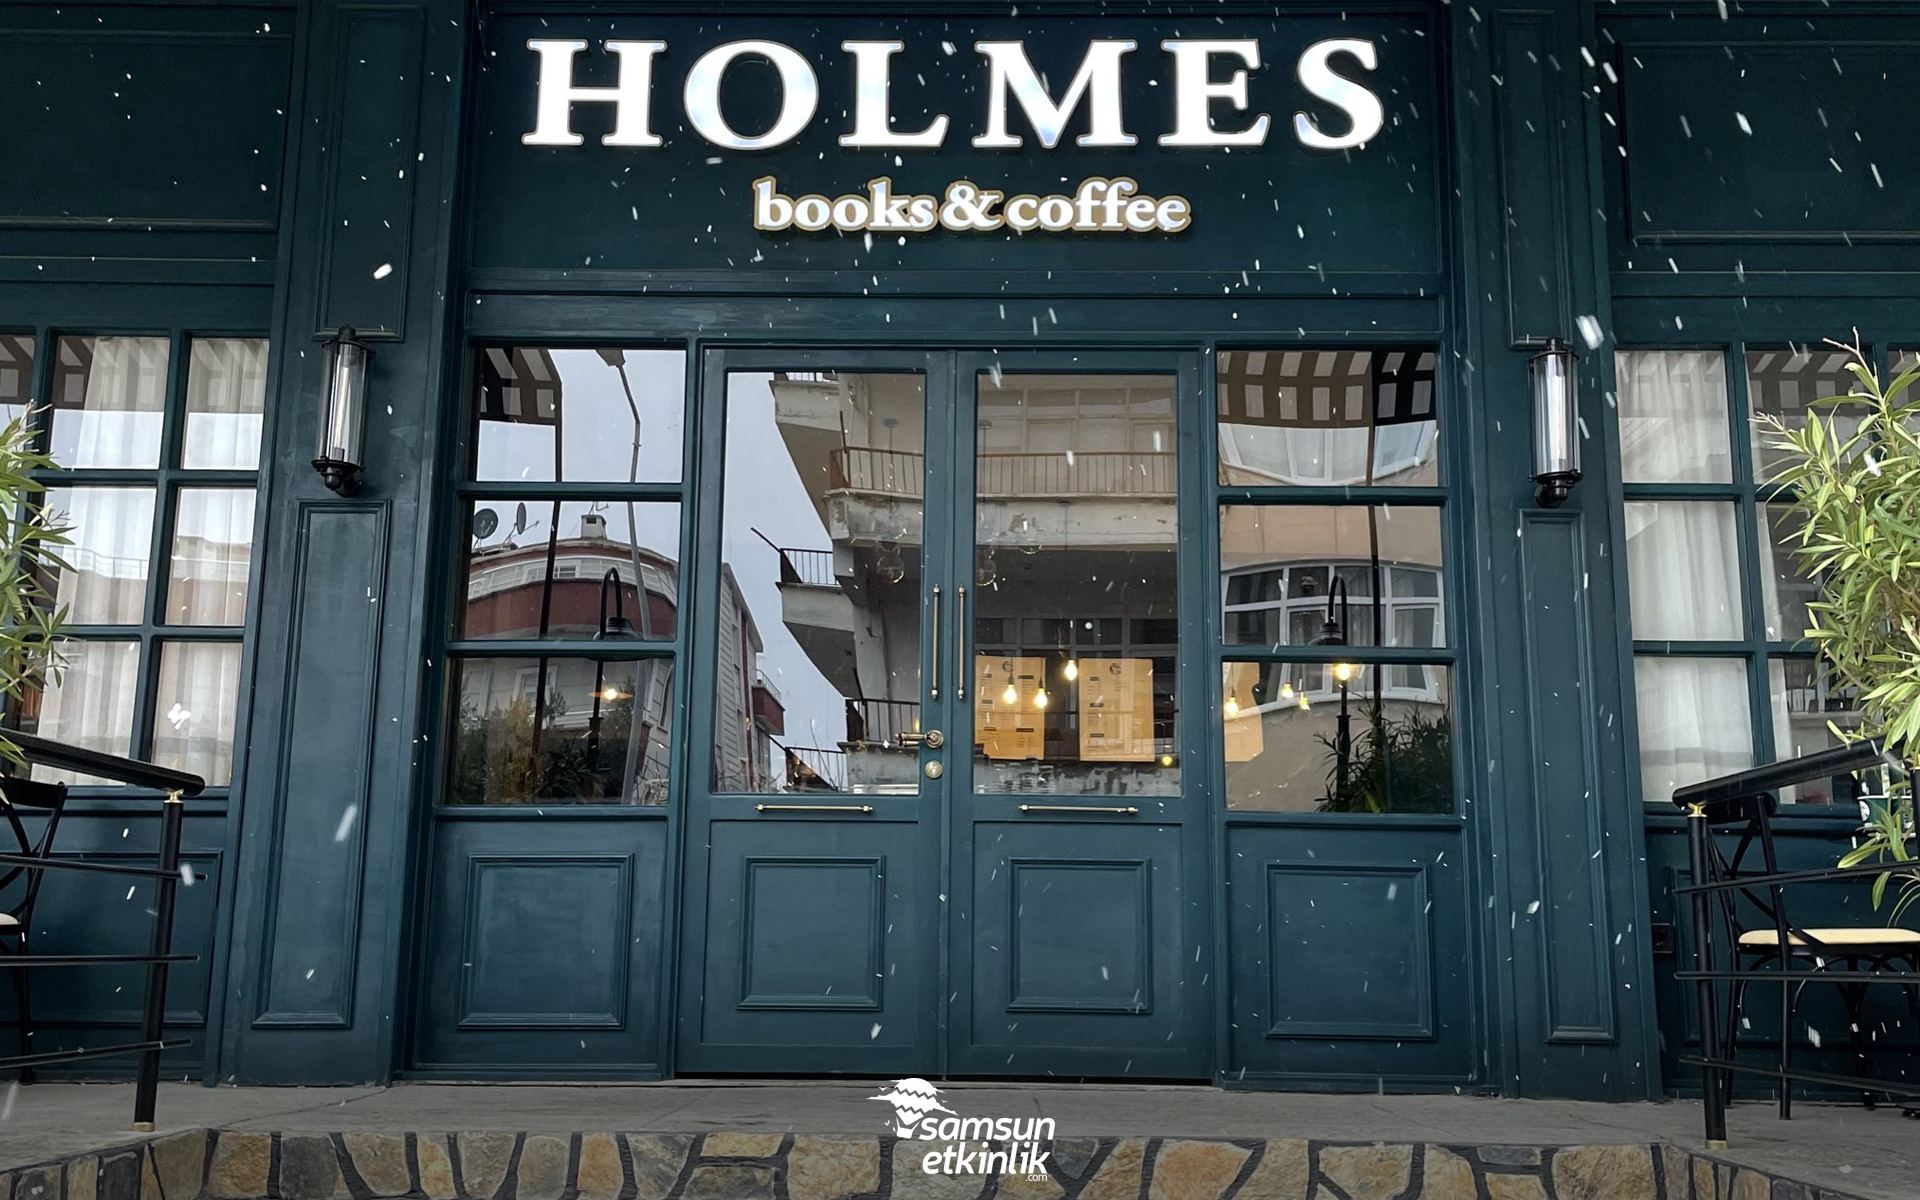 Holmes Books & Coffee